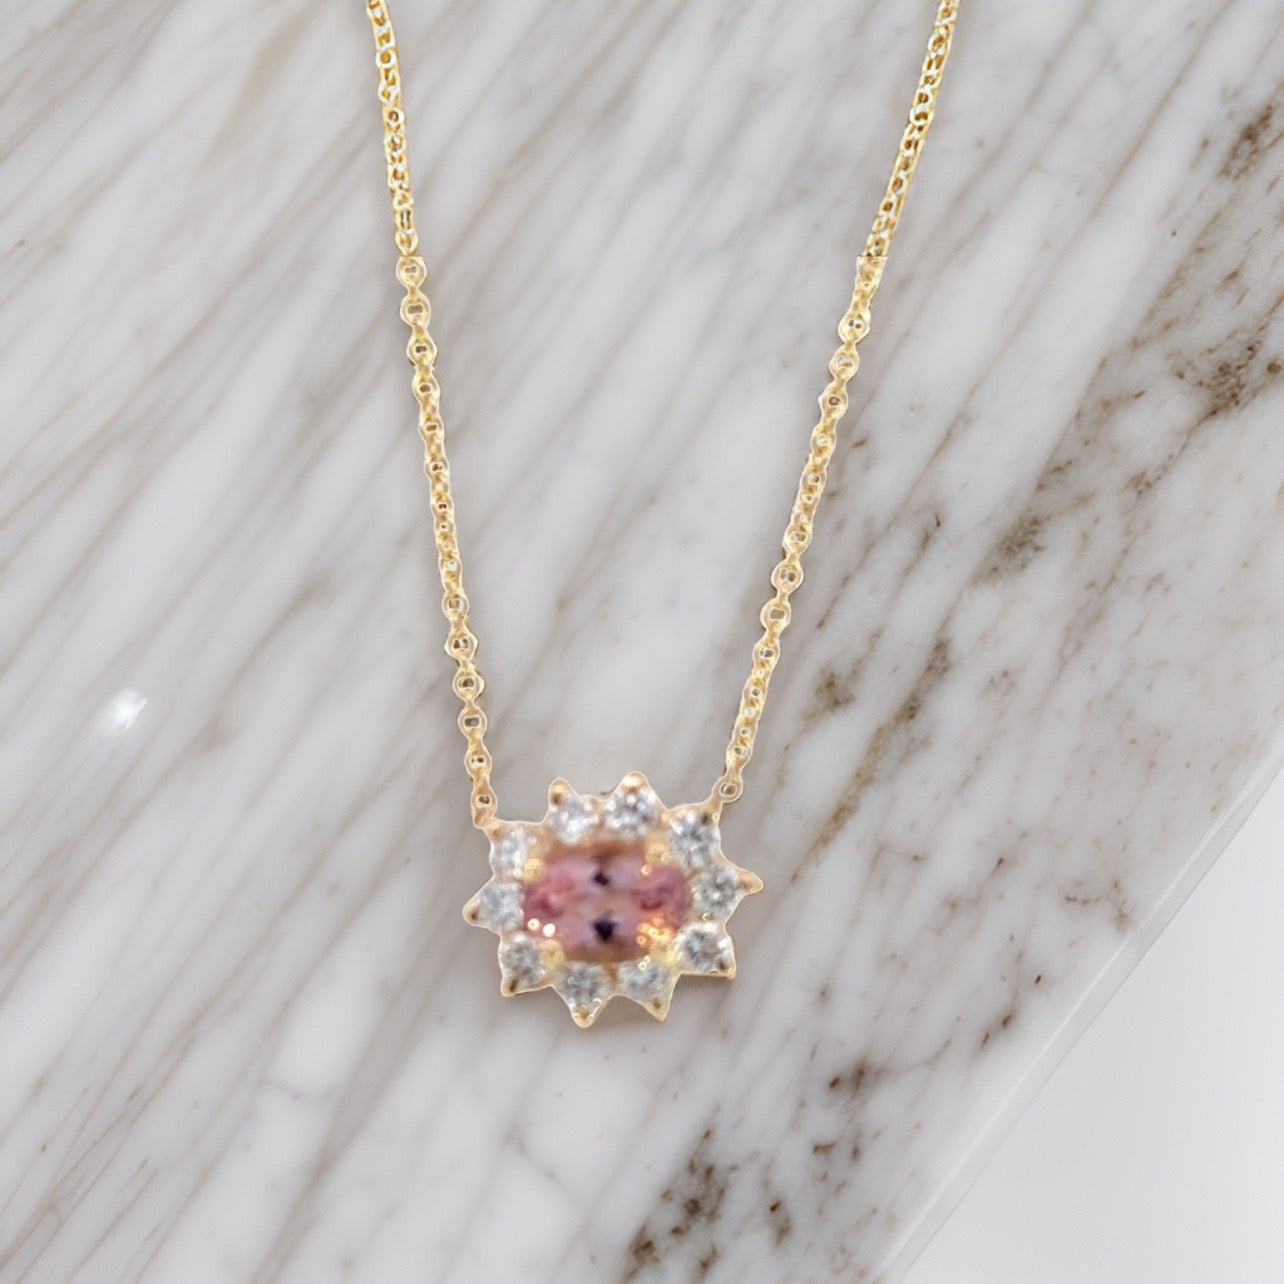 Natural Tourmaline Diamond Pendant Necklace 18" 14k YG 1.40 TCW Certified $3,450 311011 - Certified Fine Jewelry